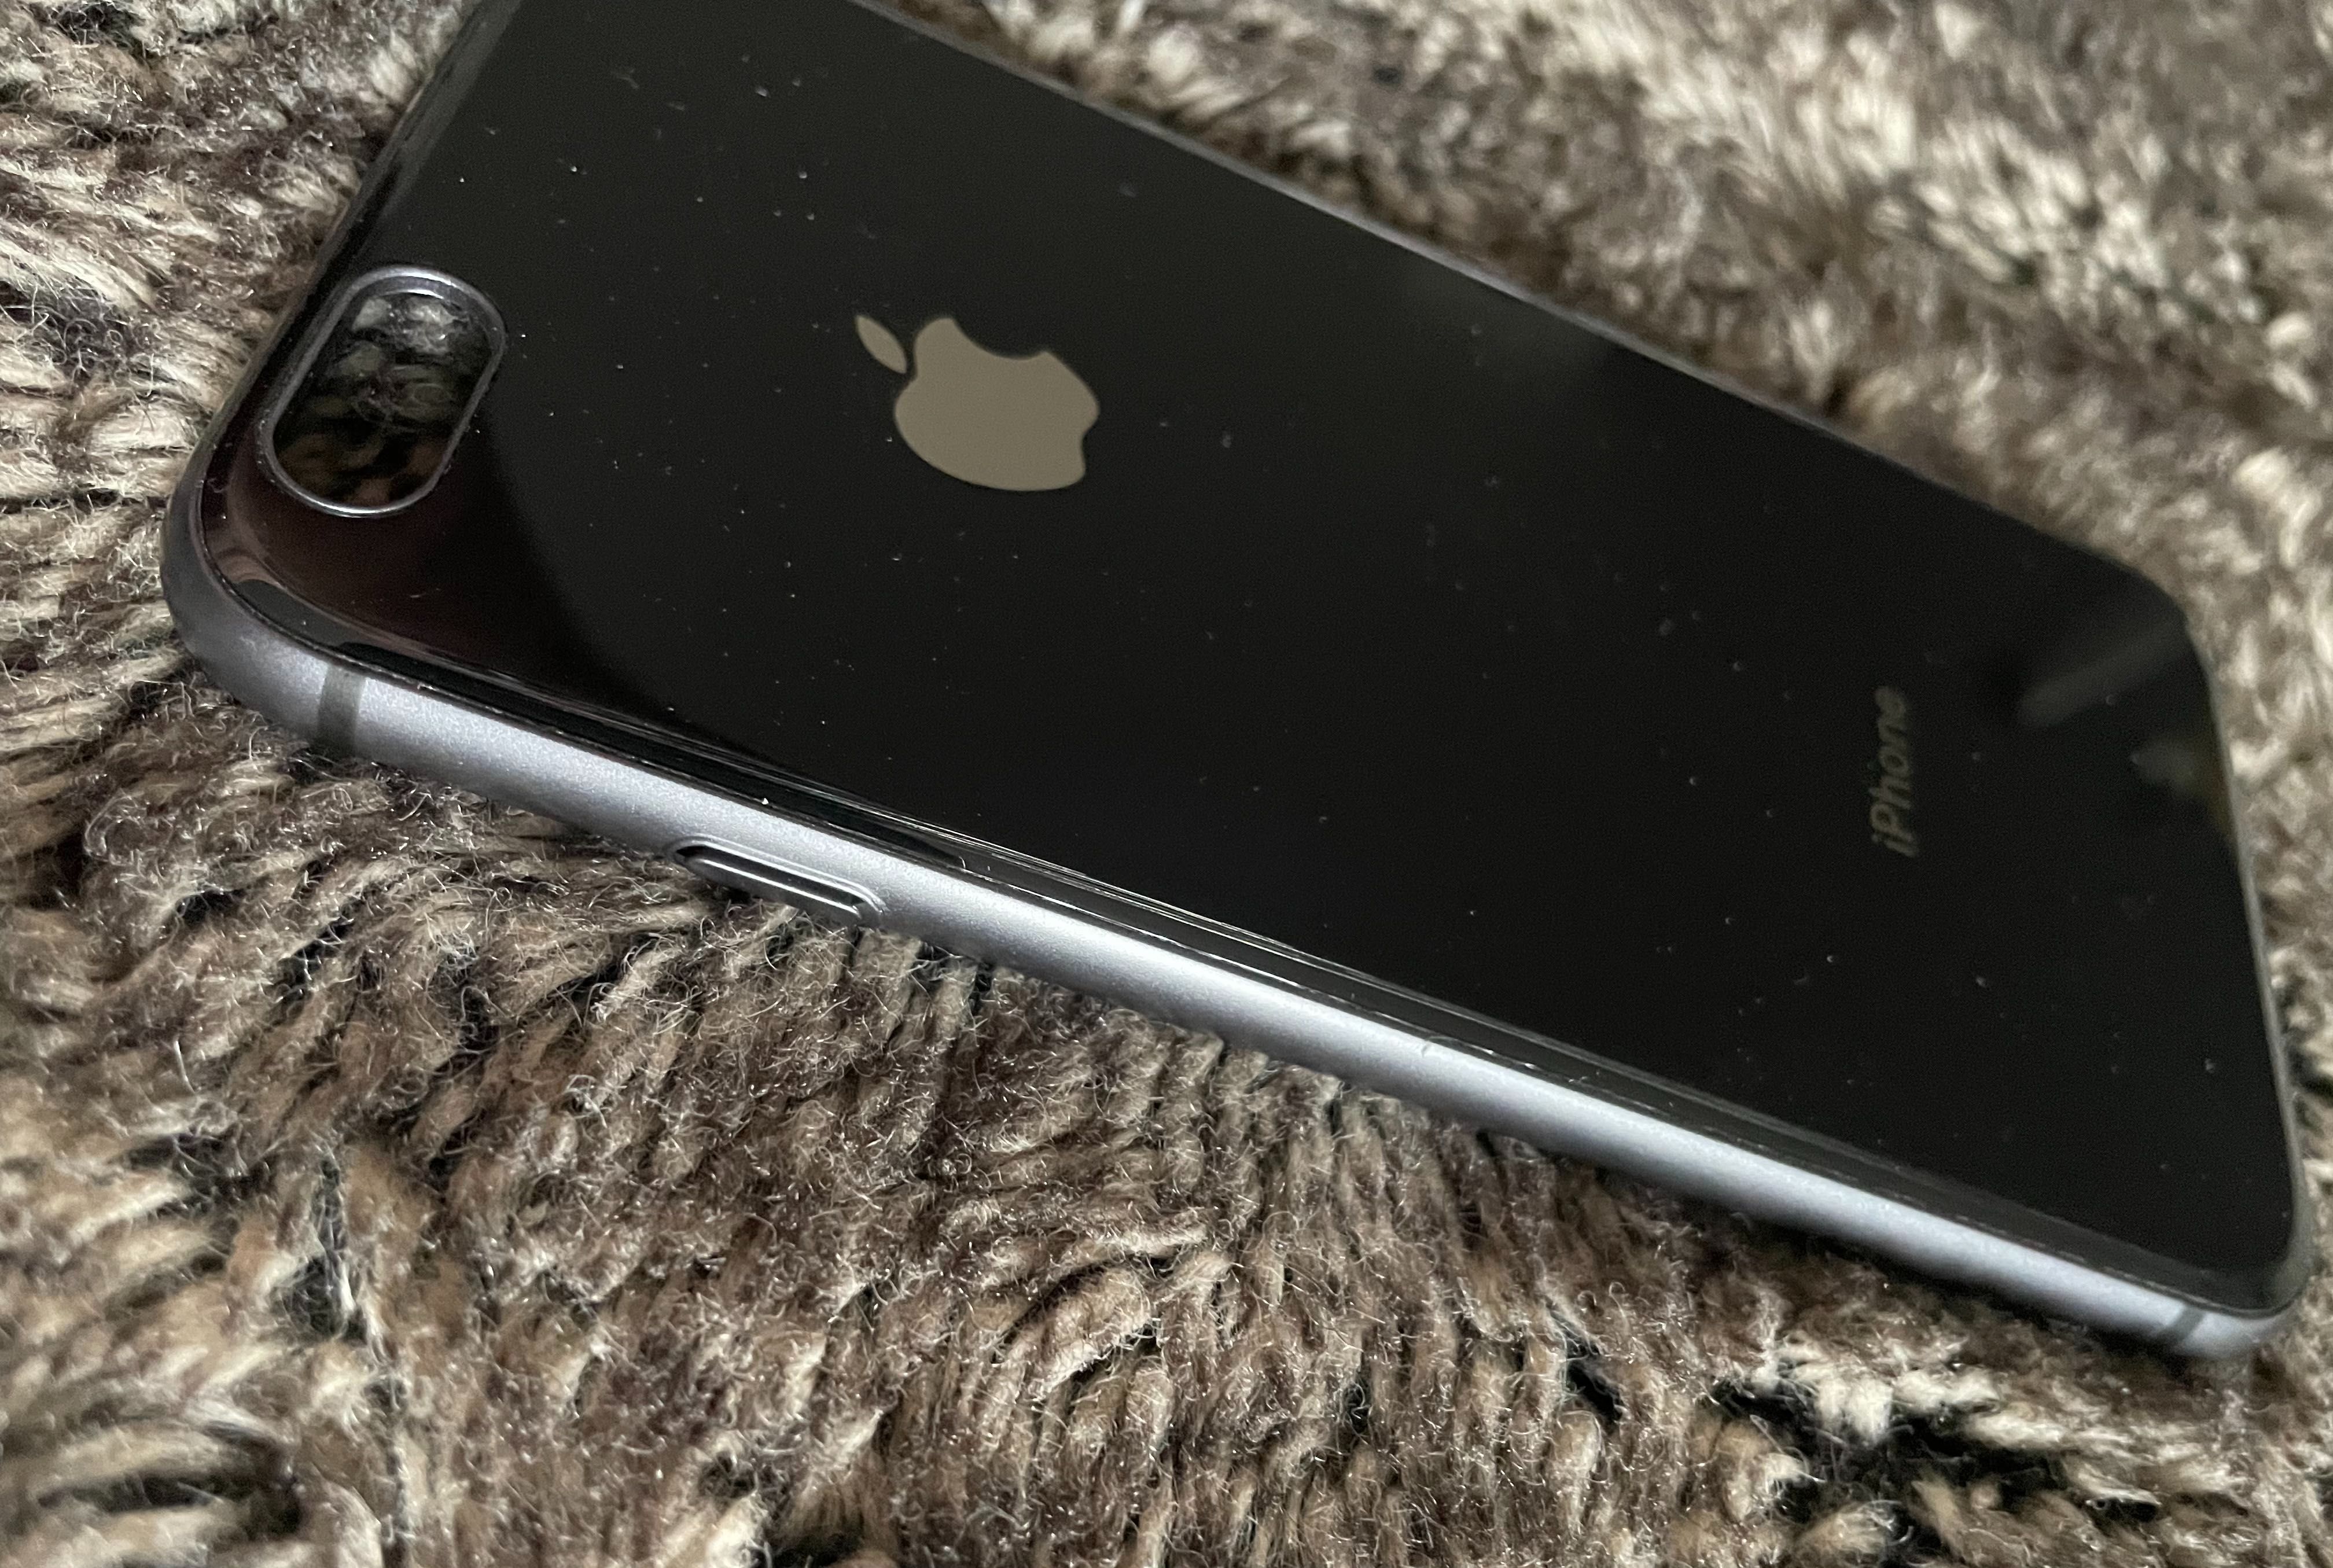 Case IPhone model 6 kol. black